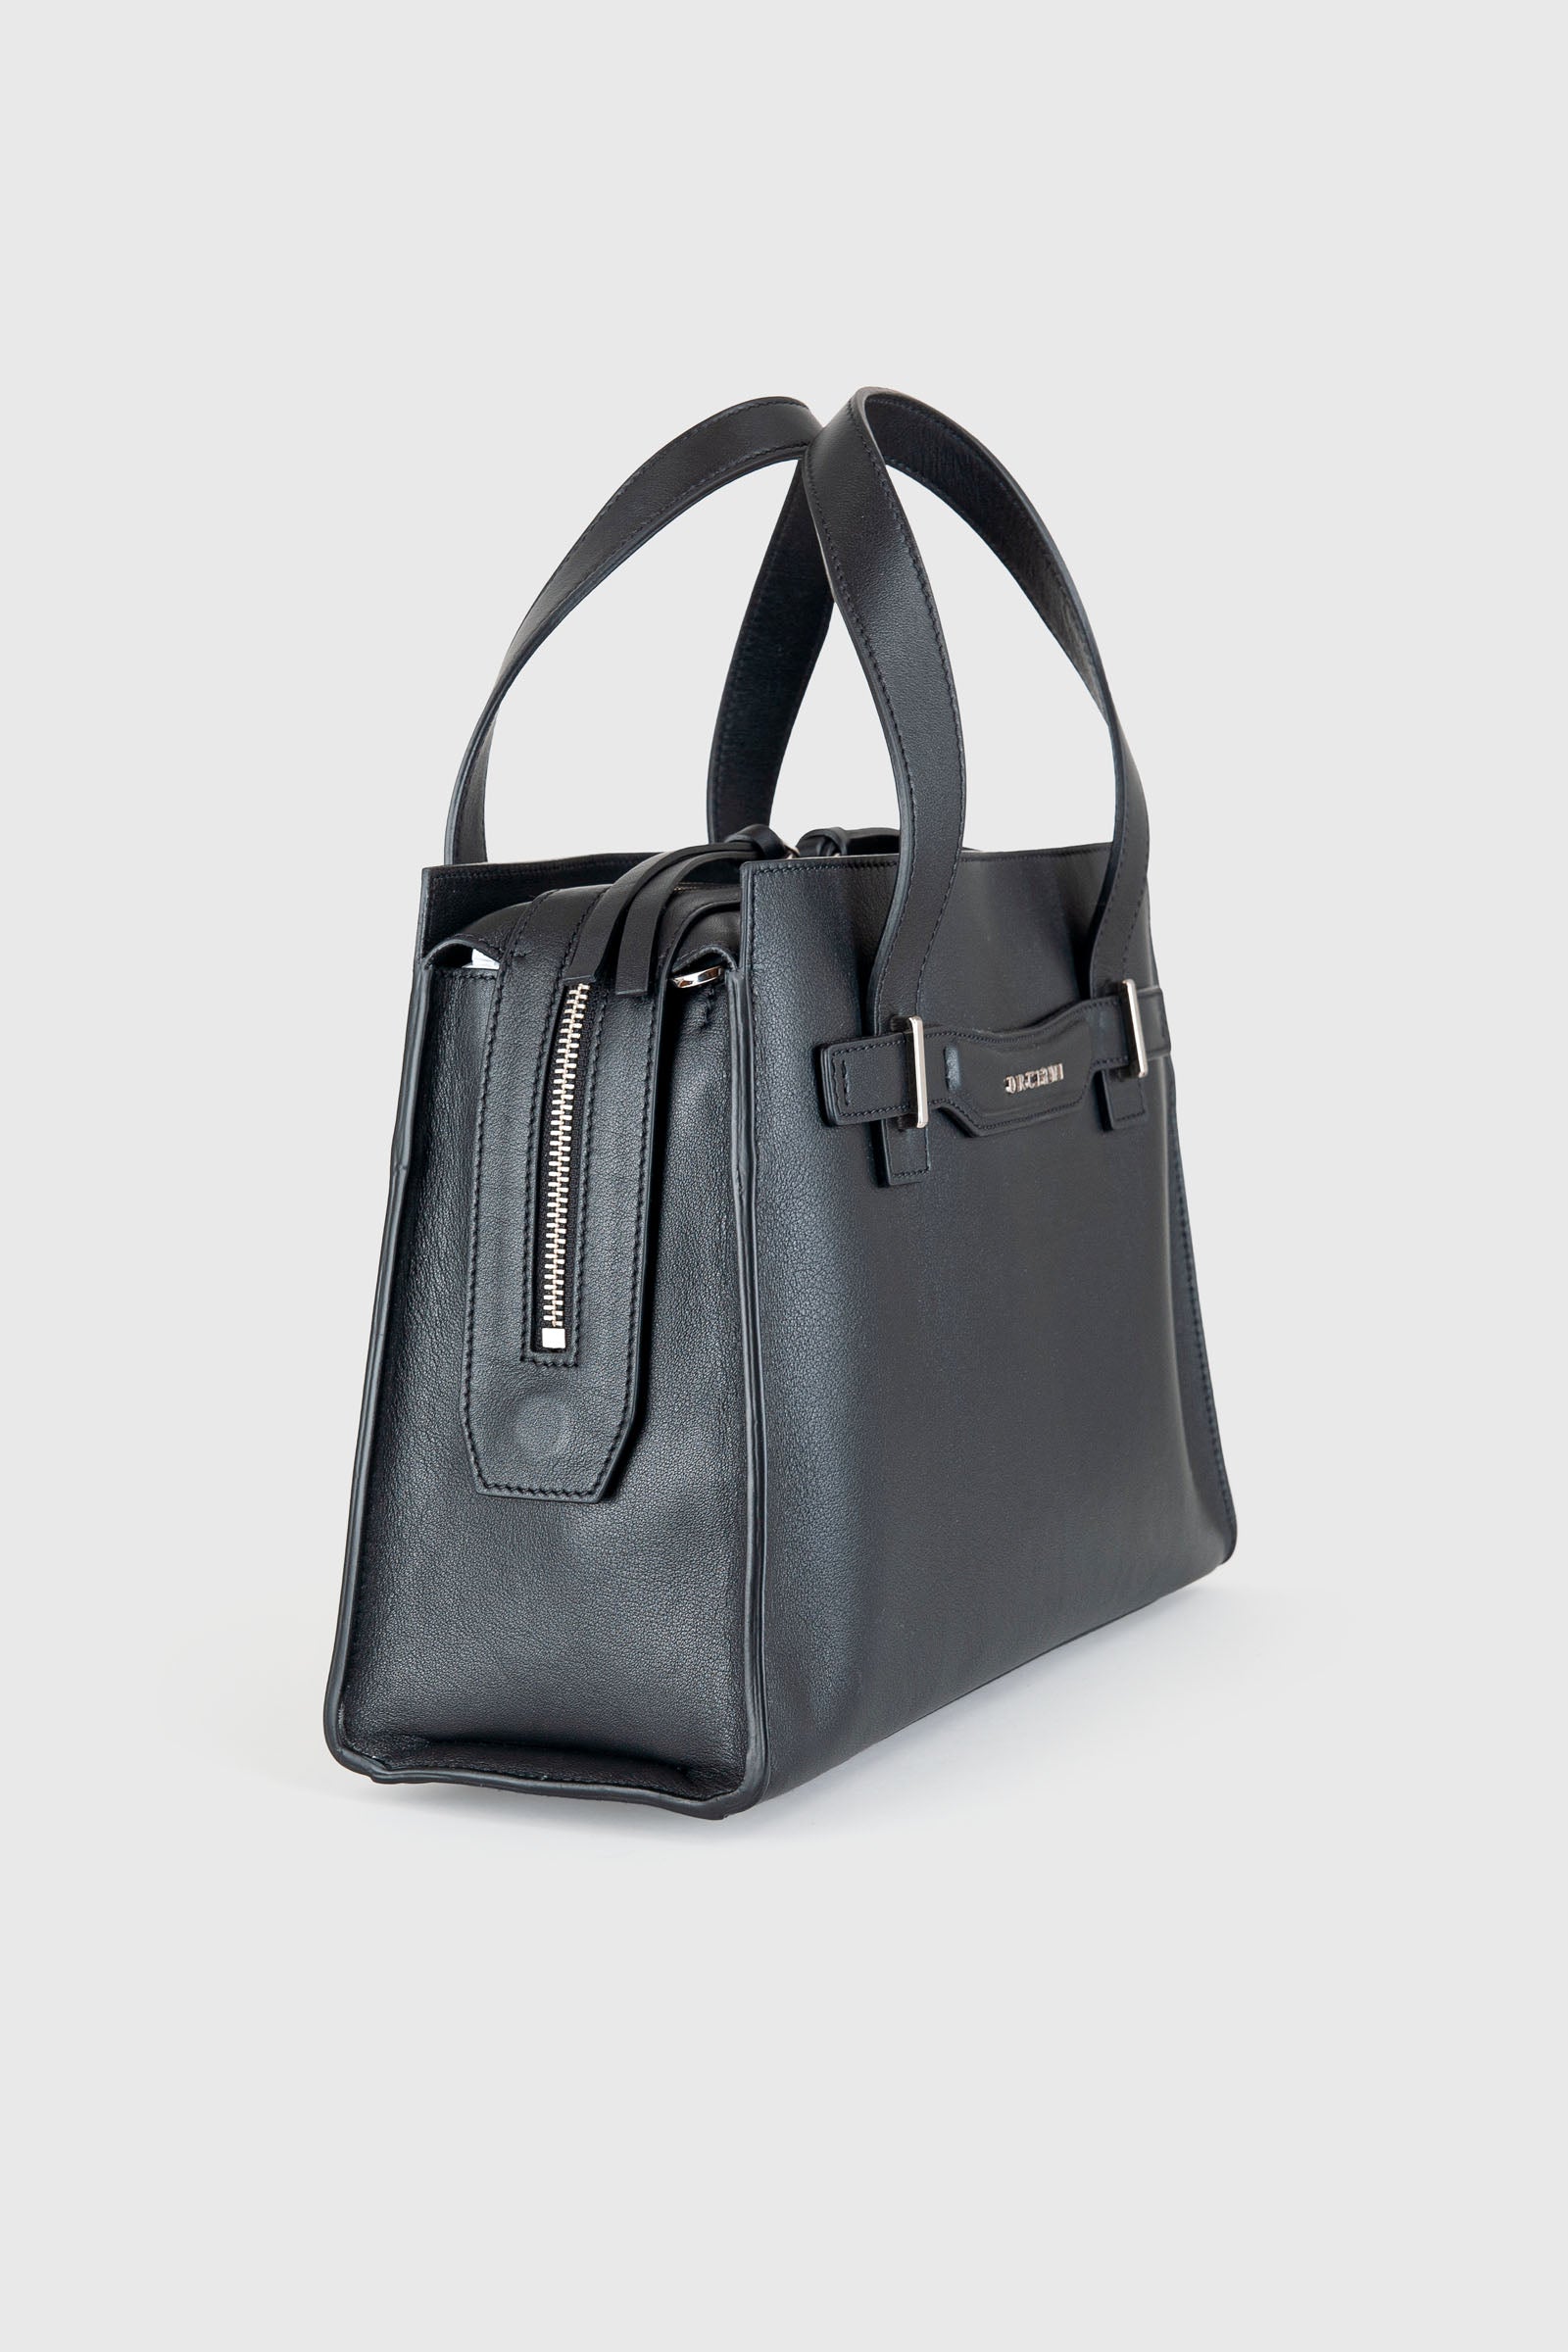 Orciani Leather Bag Black Out Black Woman B02147BLACK - 2